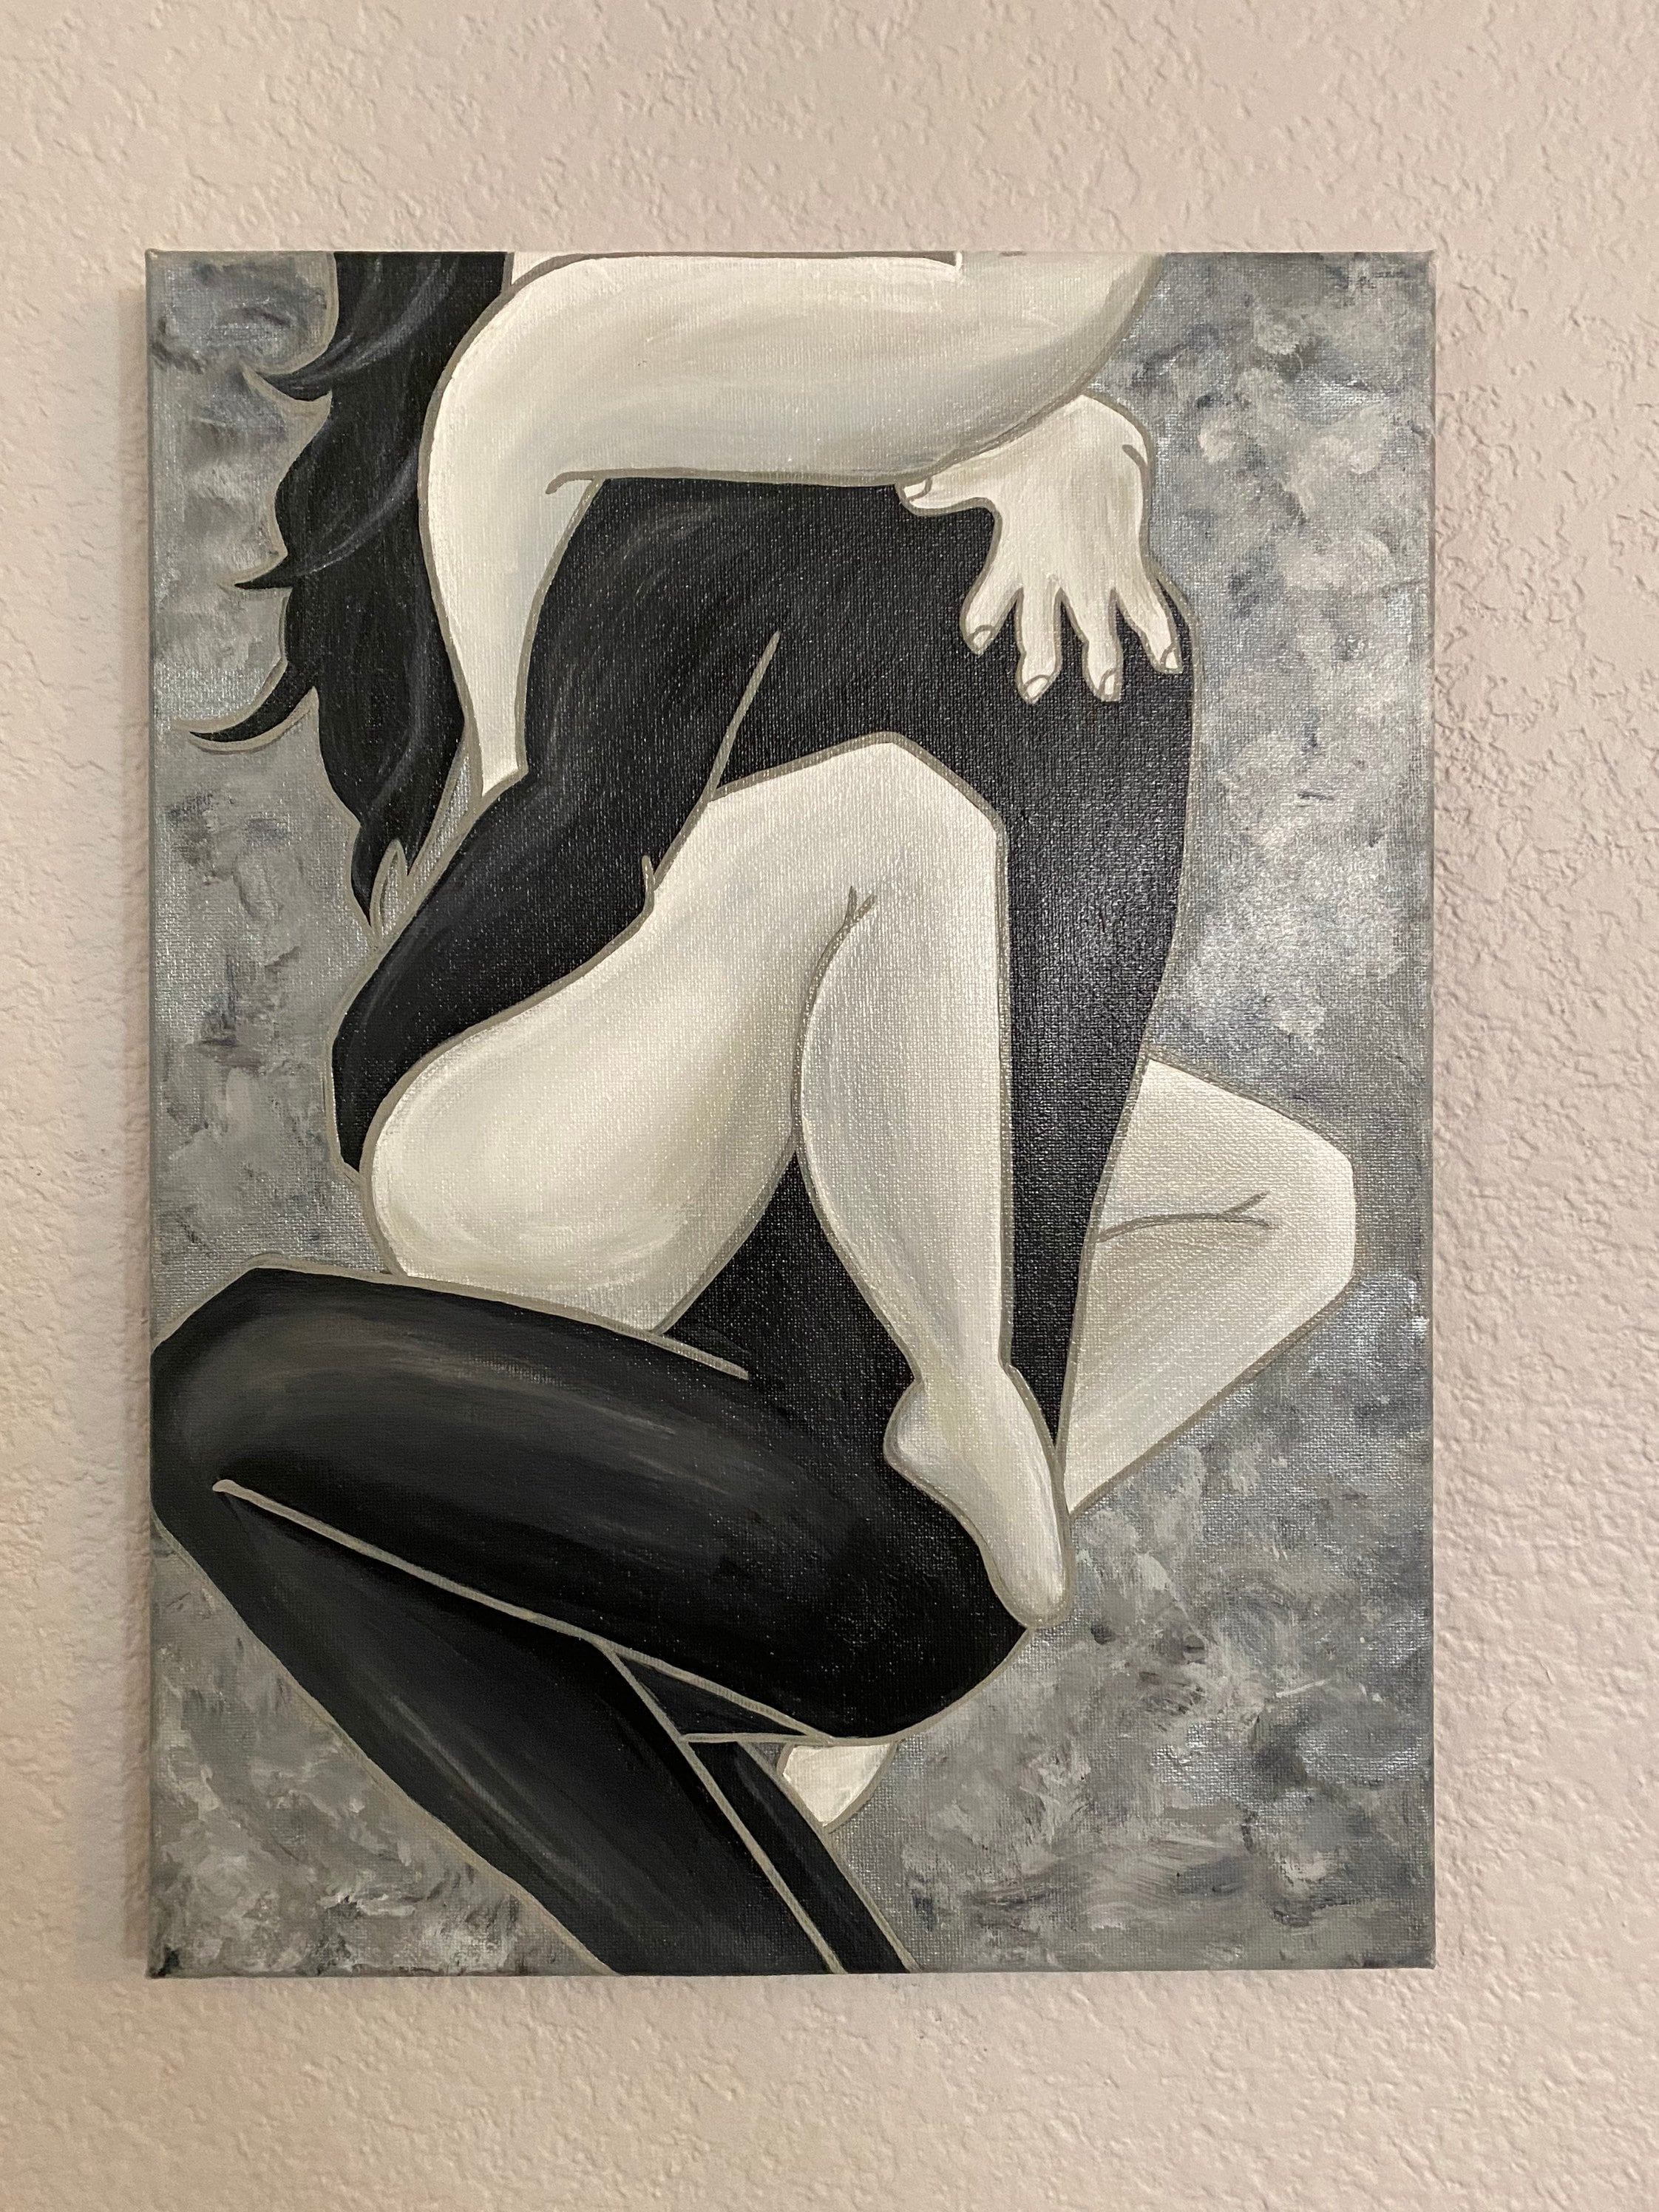 ORIGINAL Interracial Erotic Art loving Embrace 11x14 Acrylic picture